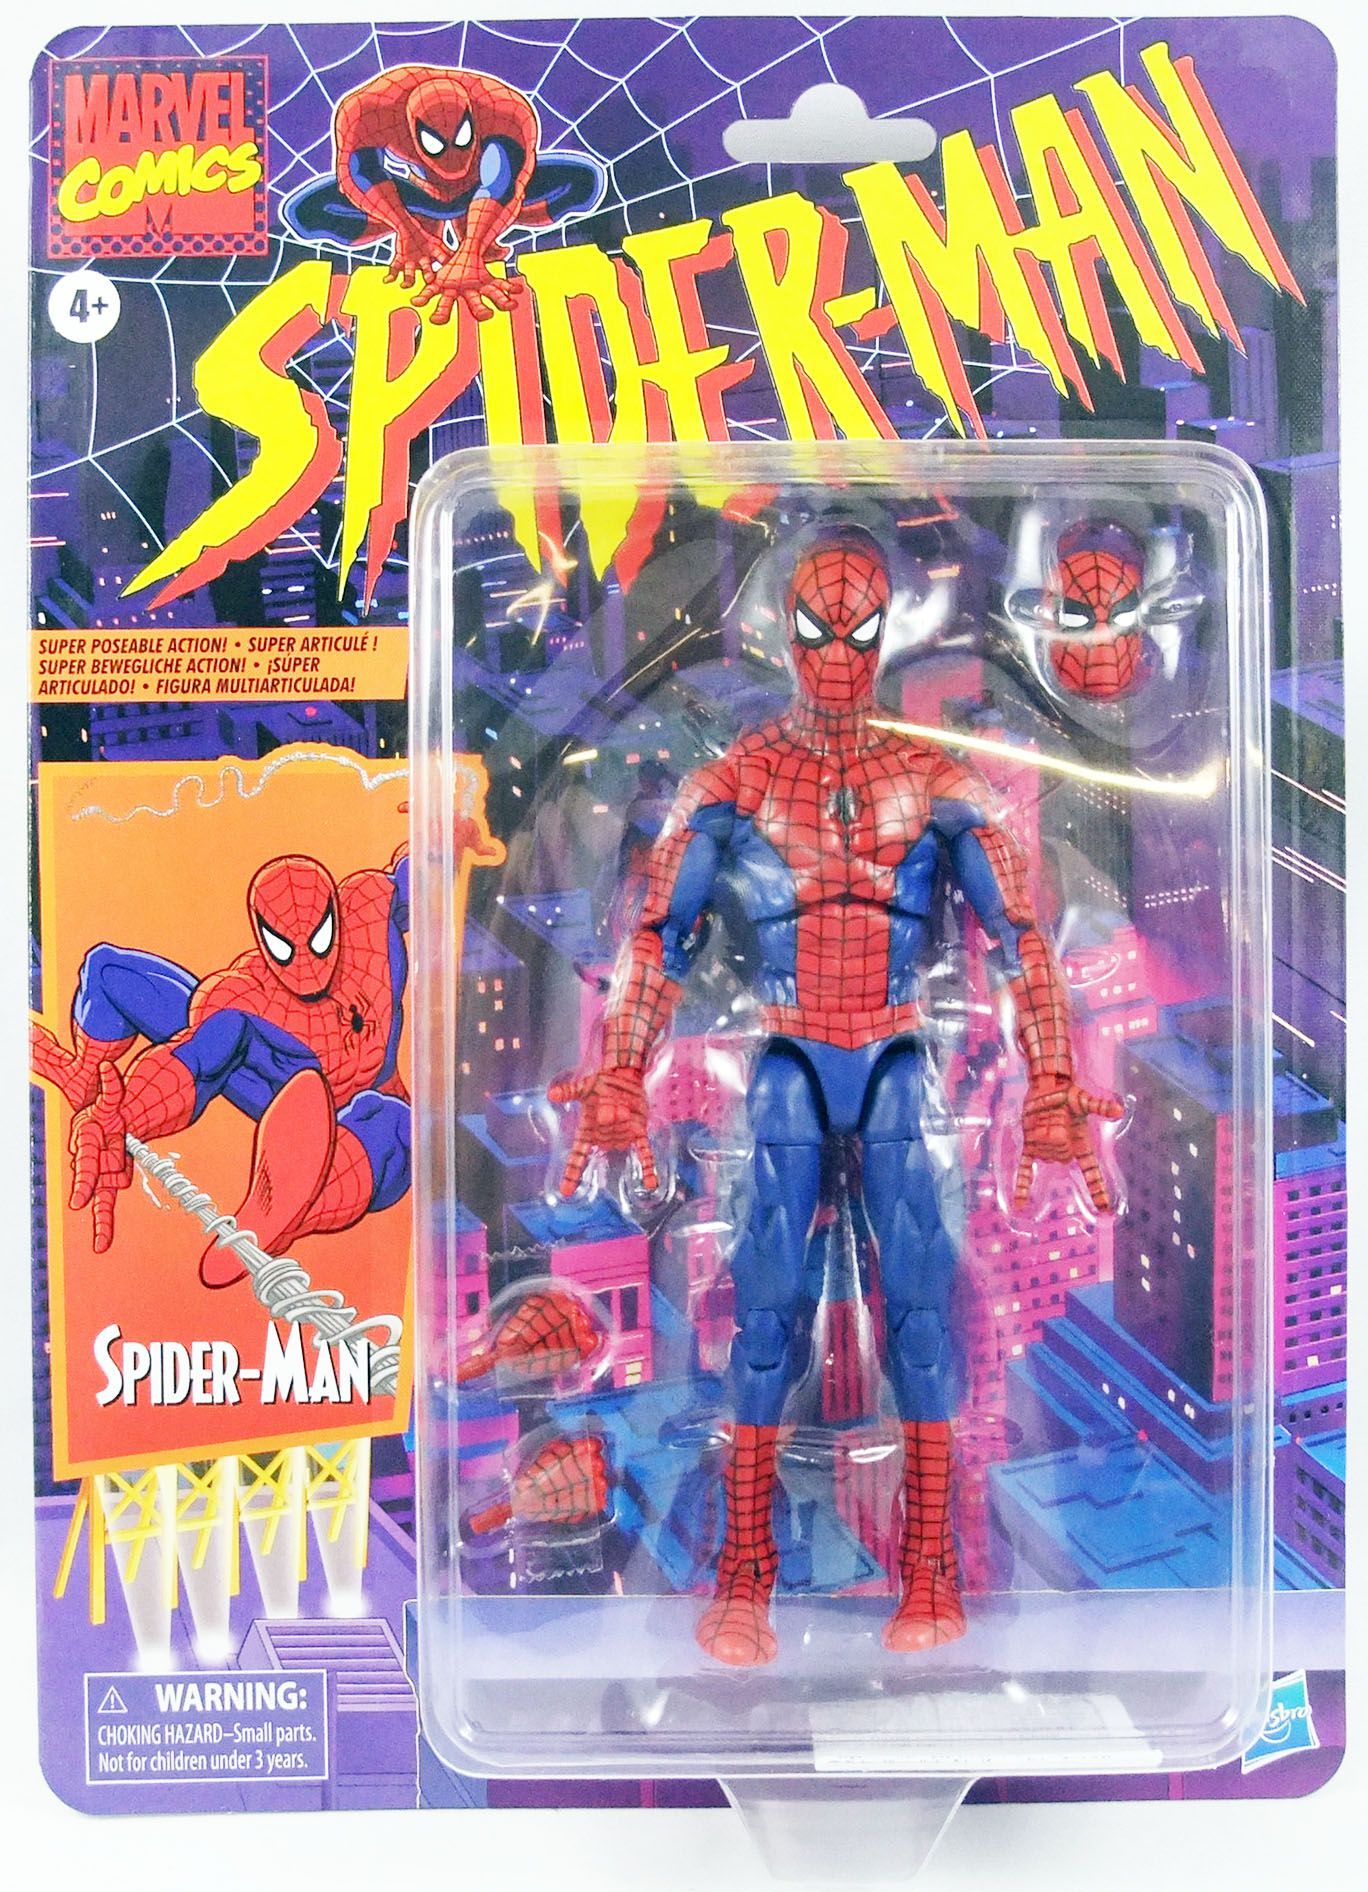 Spider Man Series 1994 | vlr.eng.br